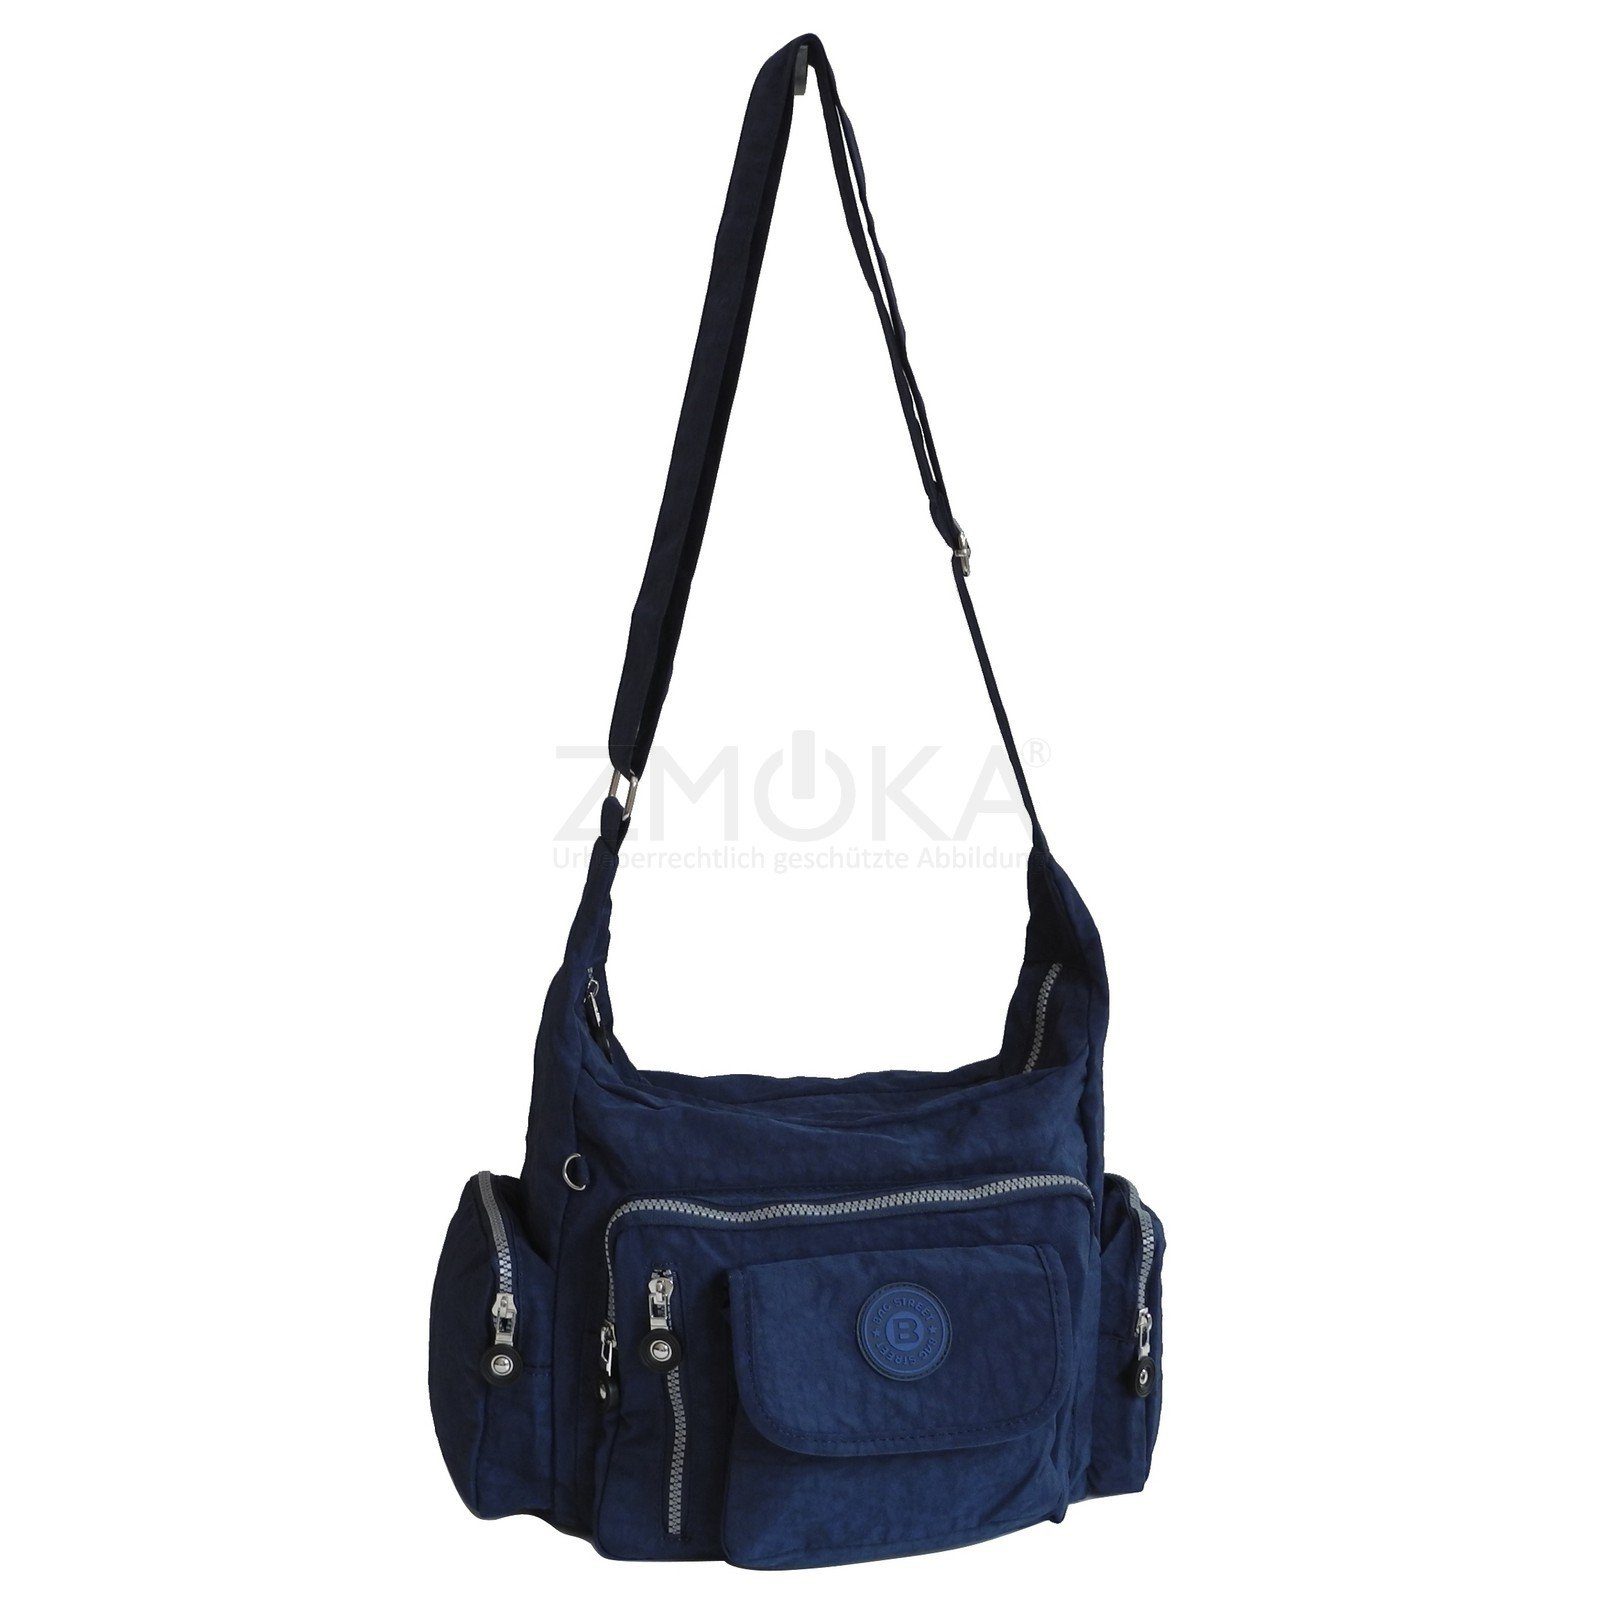 BAG STREET Umhängetasche Bag Navy Crossbody - Bag Street Stofftasche Umhängetasche Schultertasche